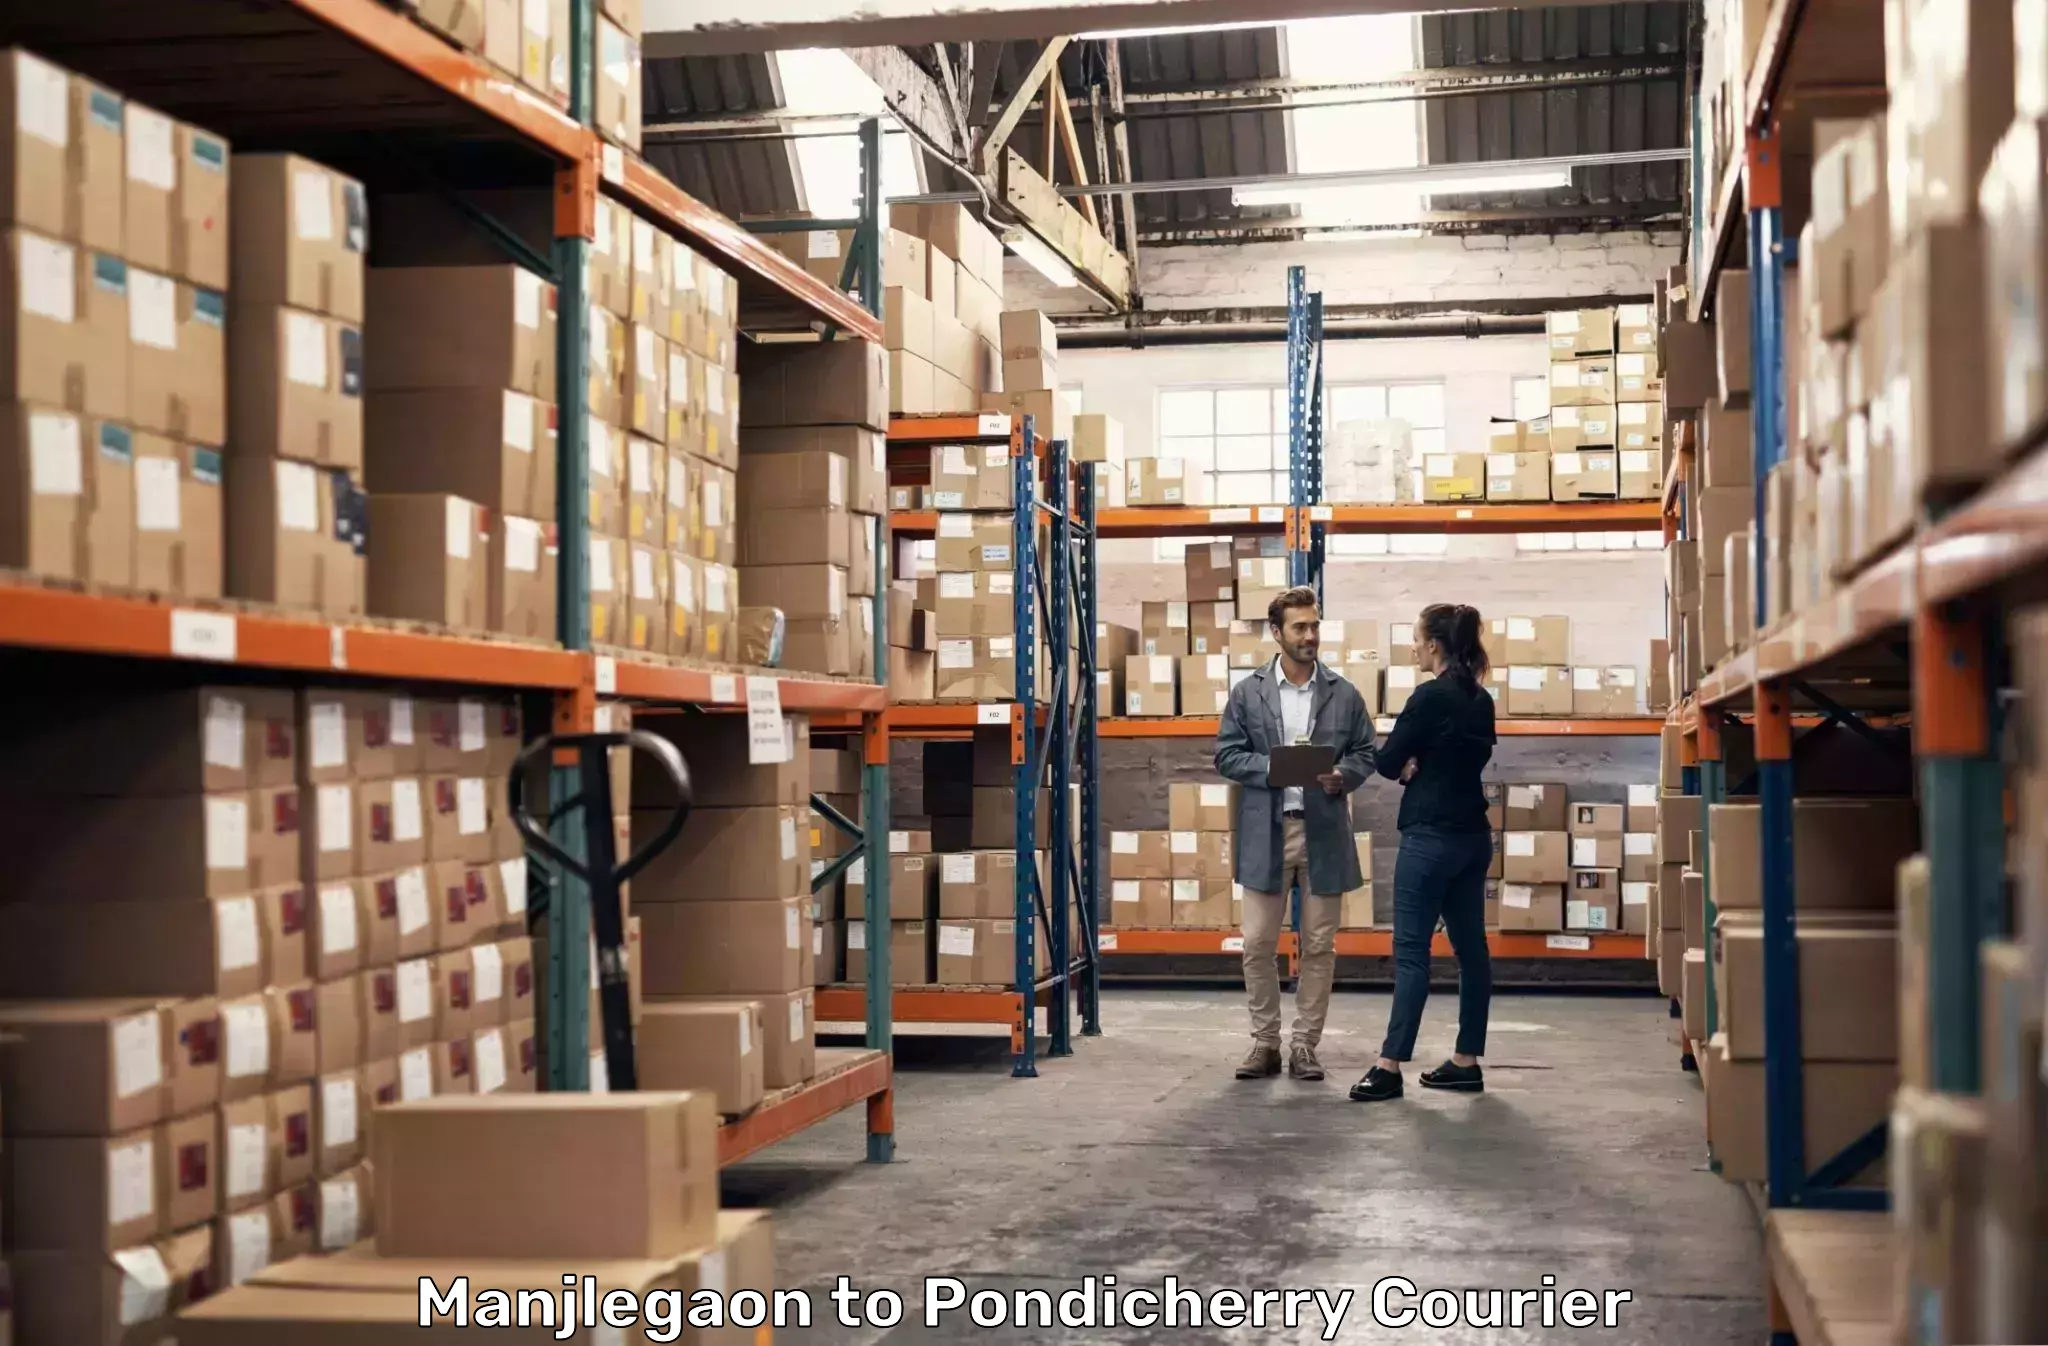 Comprehensive logistics Manjlegaon to Pondicherry